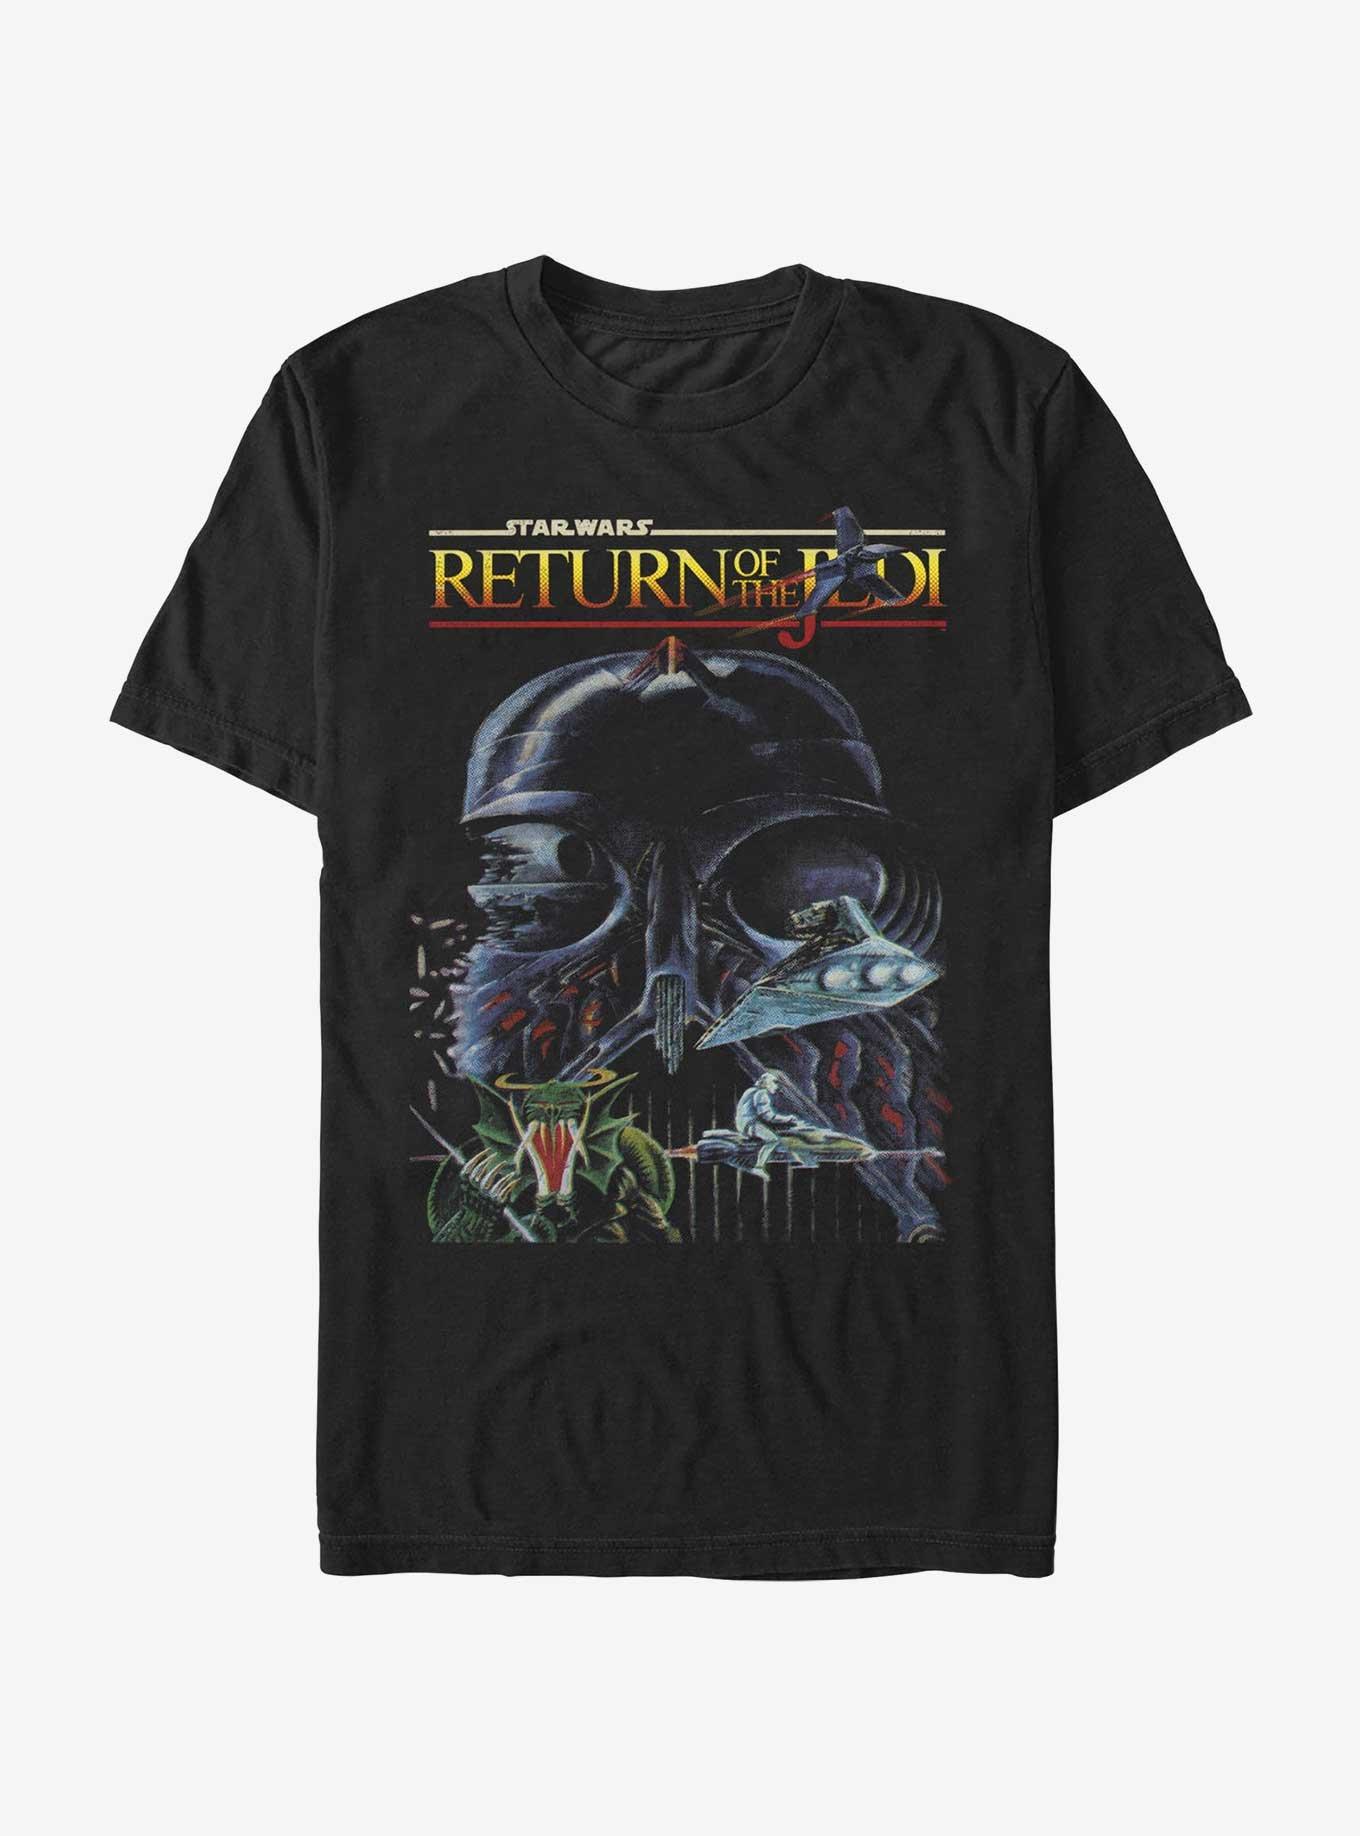 Star Wars Return of the Jedi 40th Anniversary Concept Cover Art T-Shirt